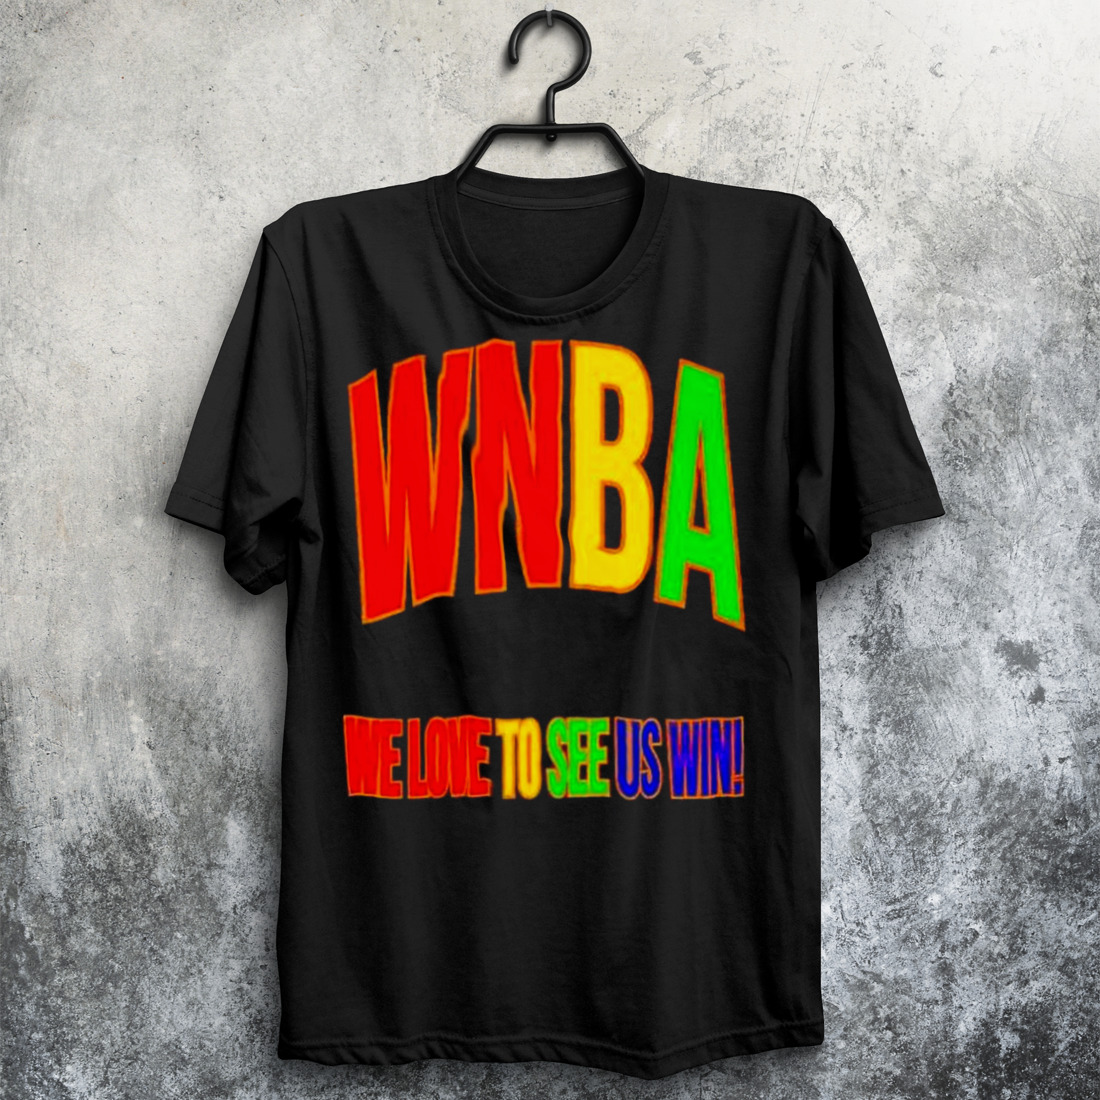 WNBA Pride We Love To See Us Win T-Shirt